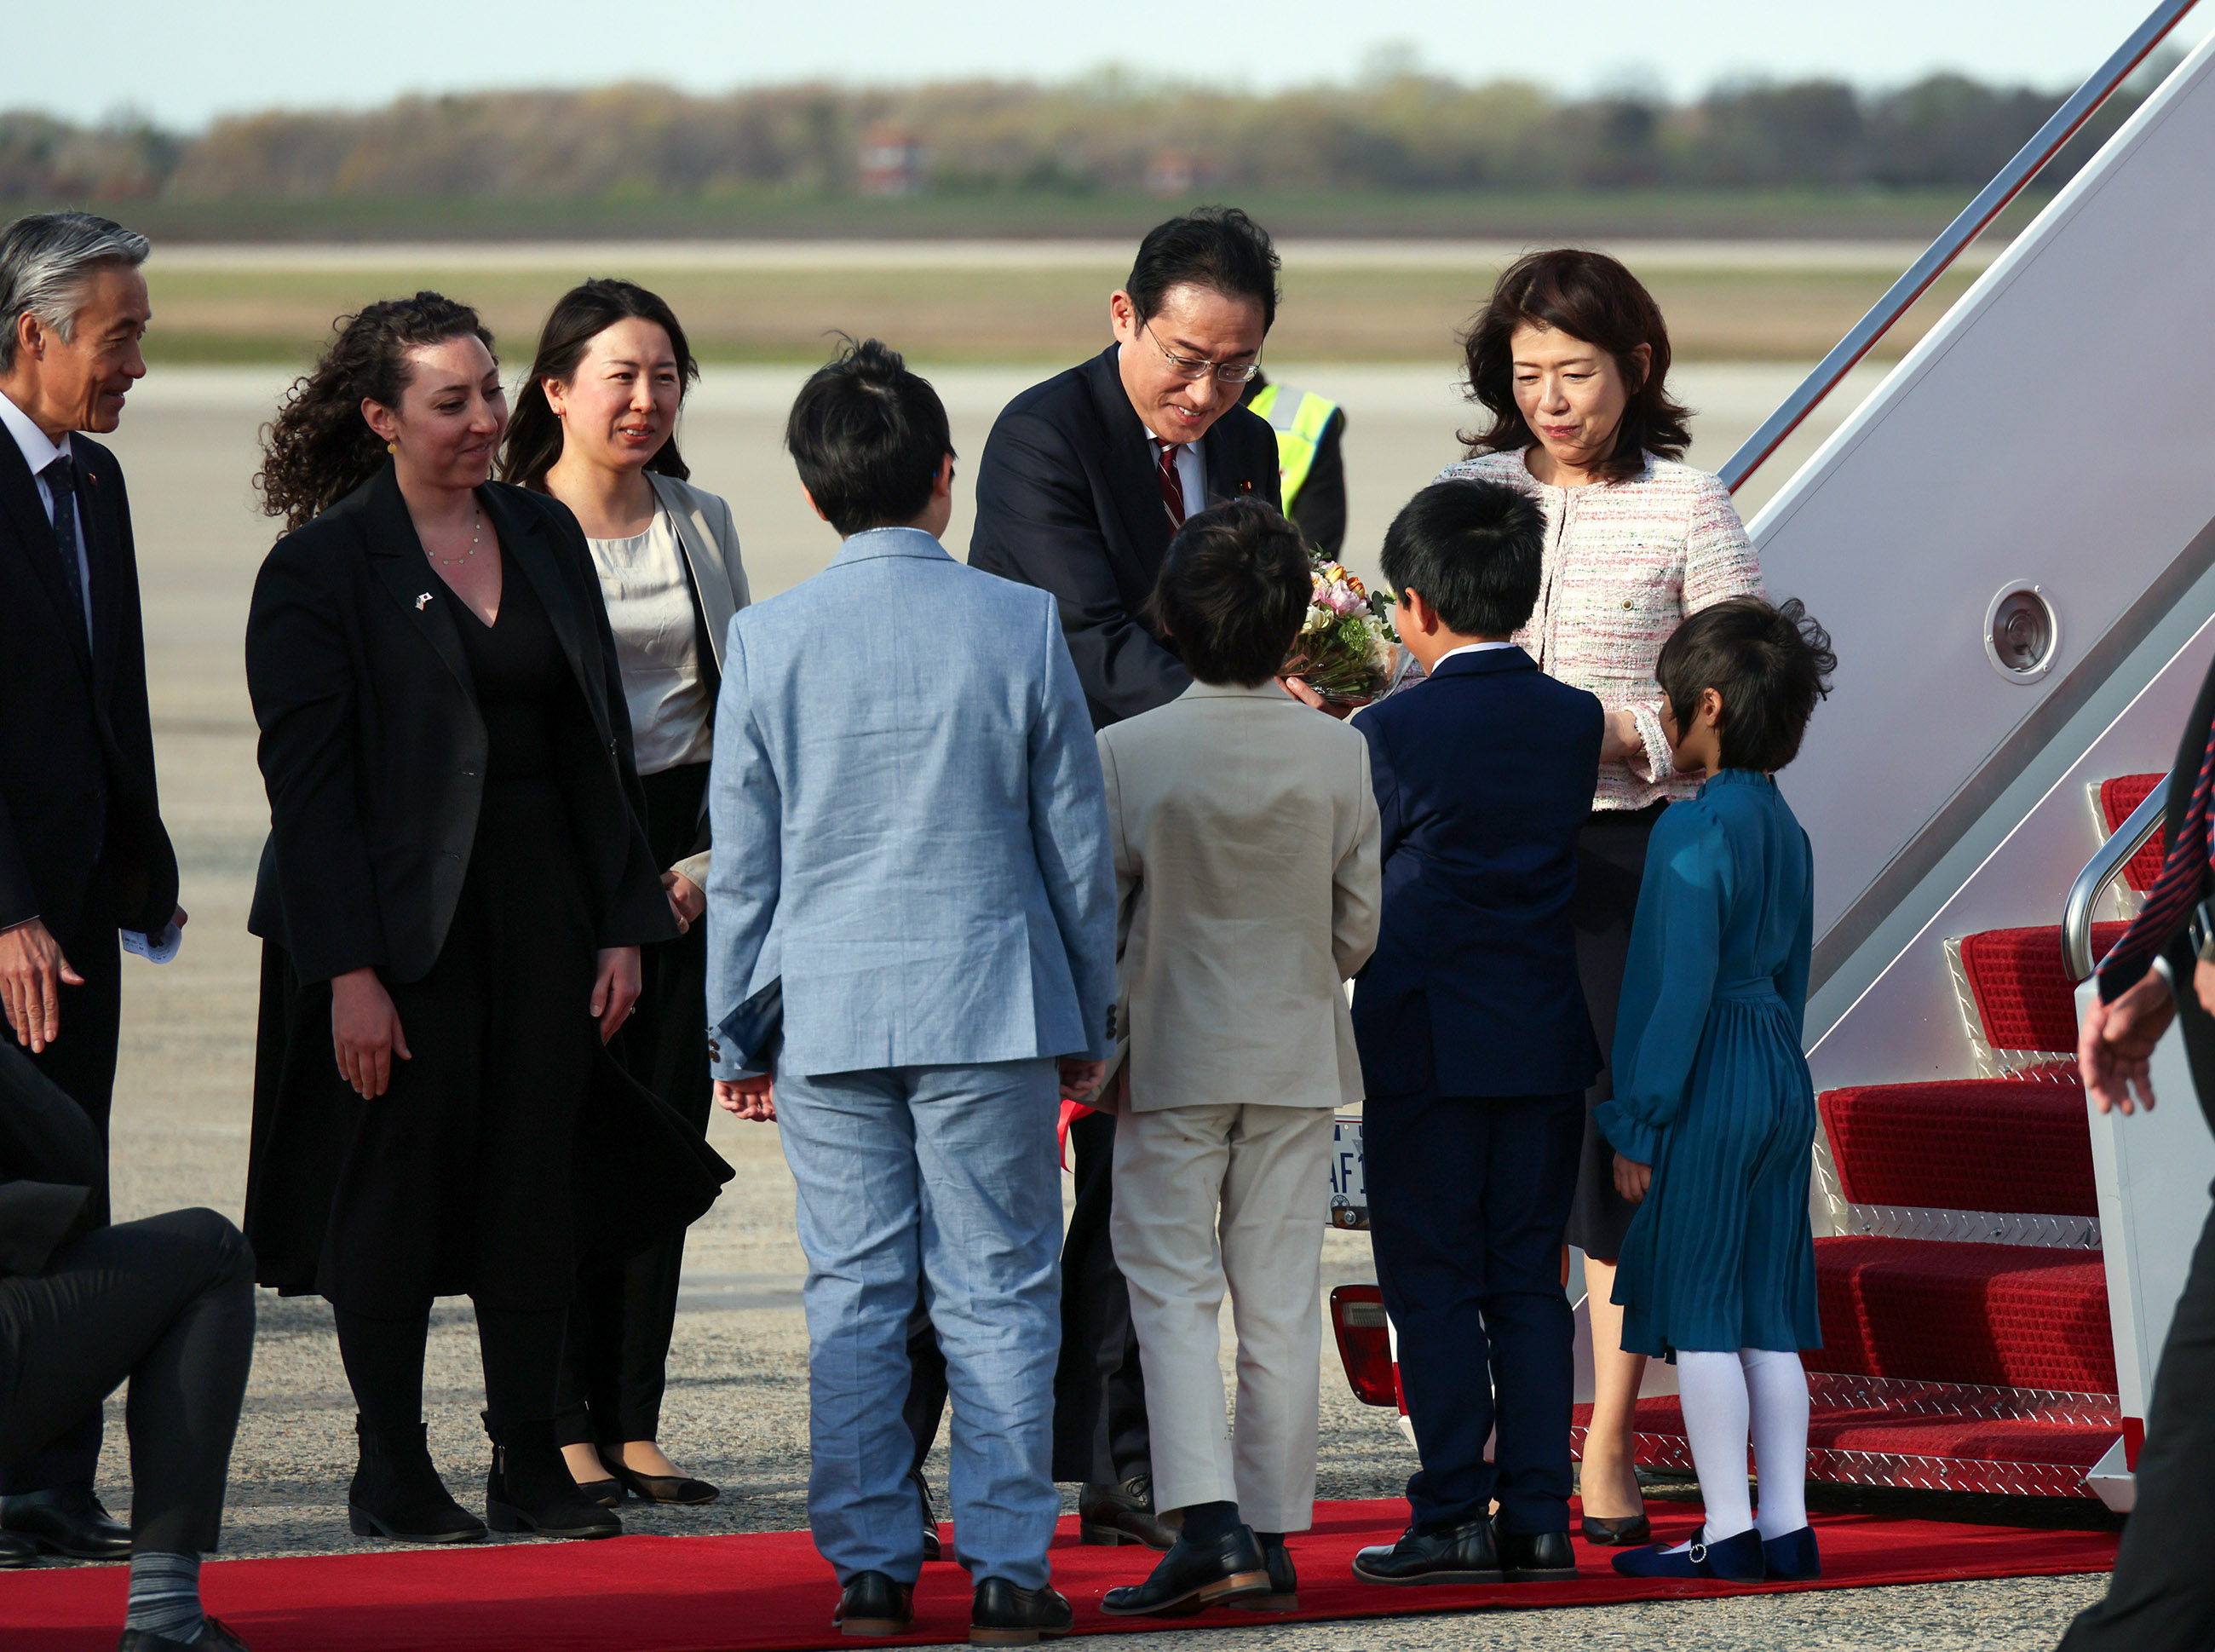 Prime Minister Kishida arriving in the United States (2)